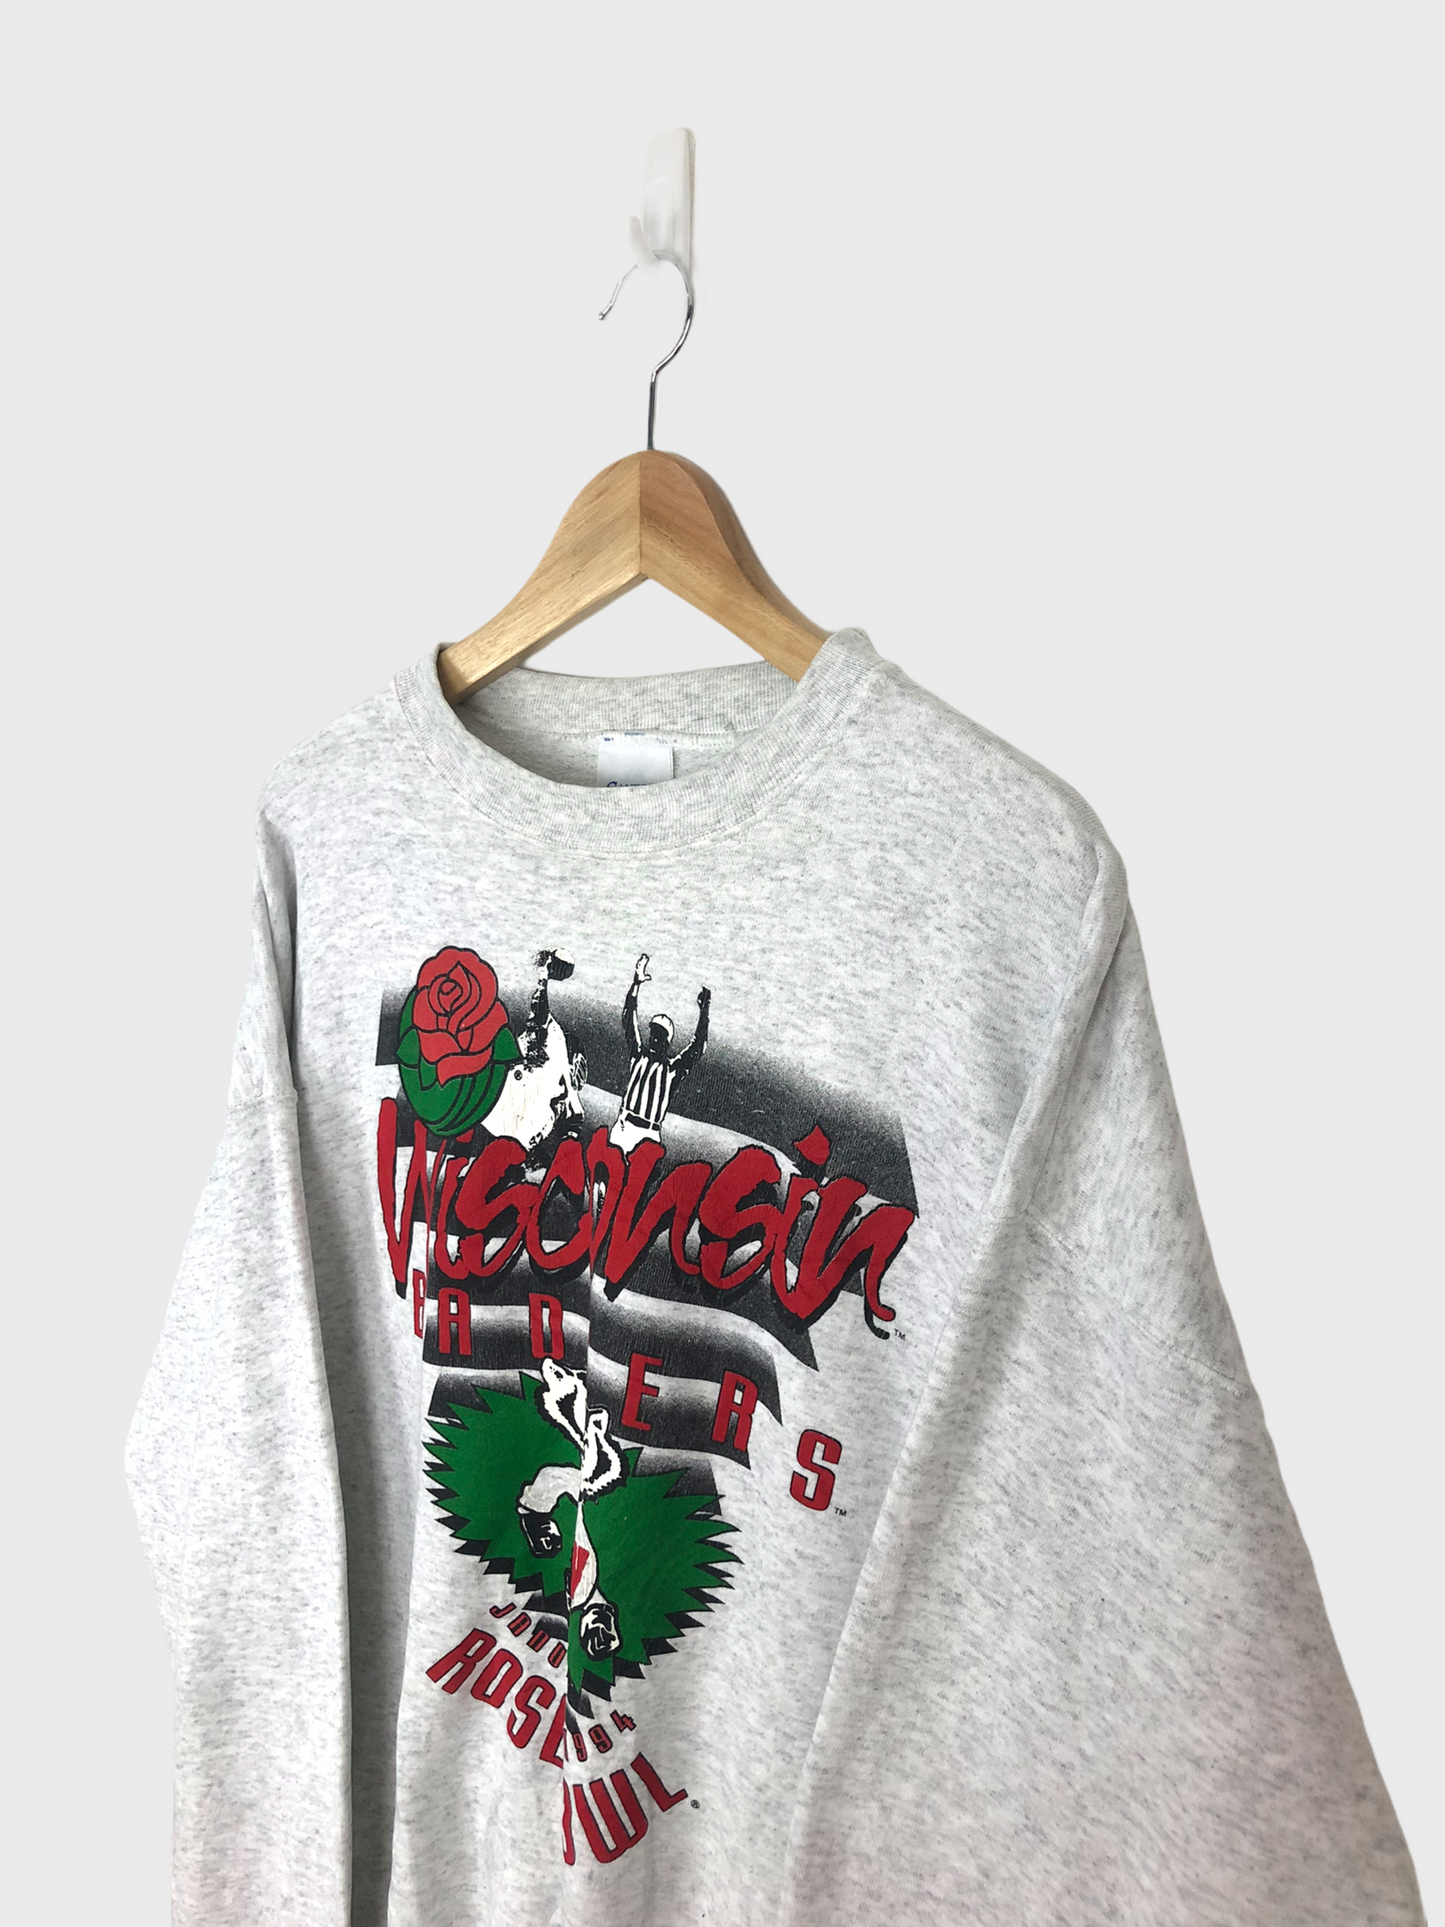 Wisconsin Badgers 1994 USA Made Vintage Sweatshirt Size 10-12